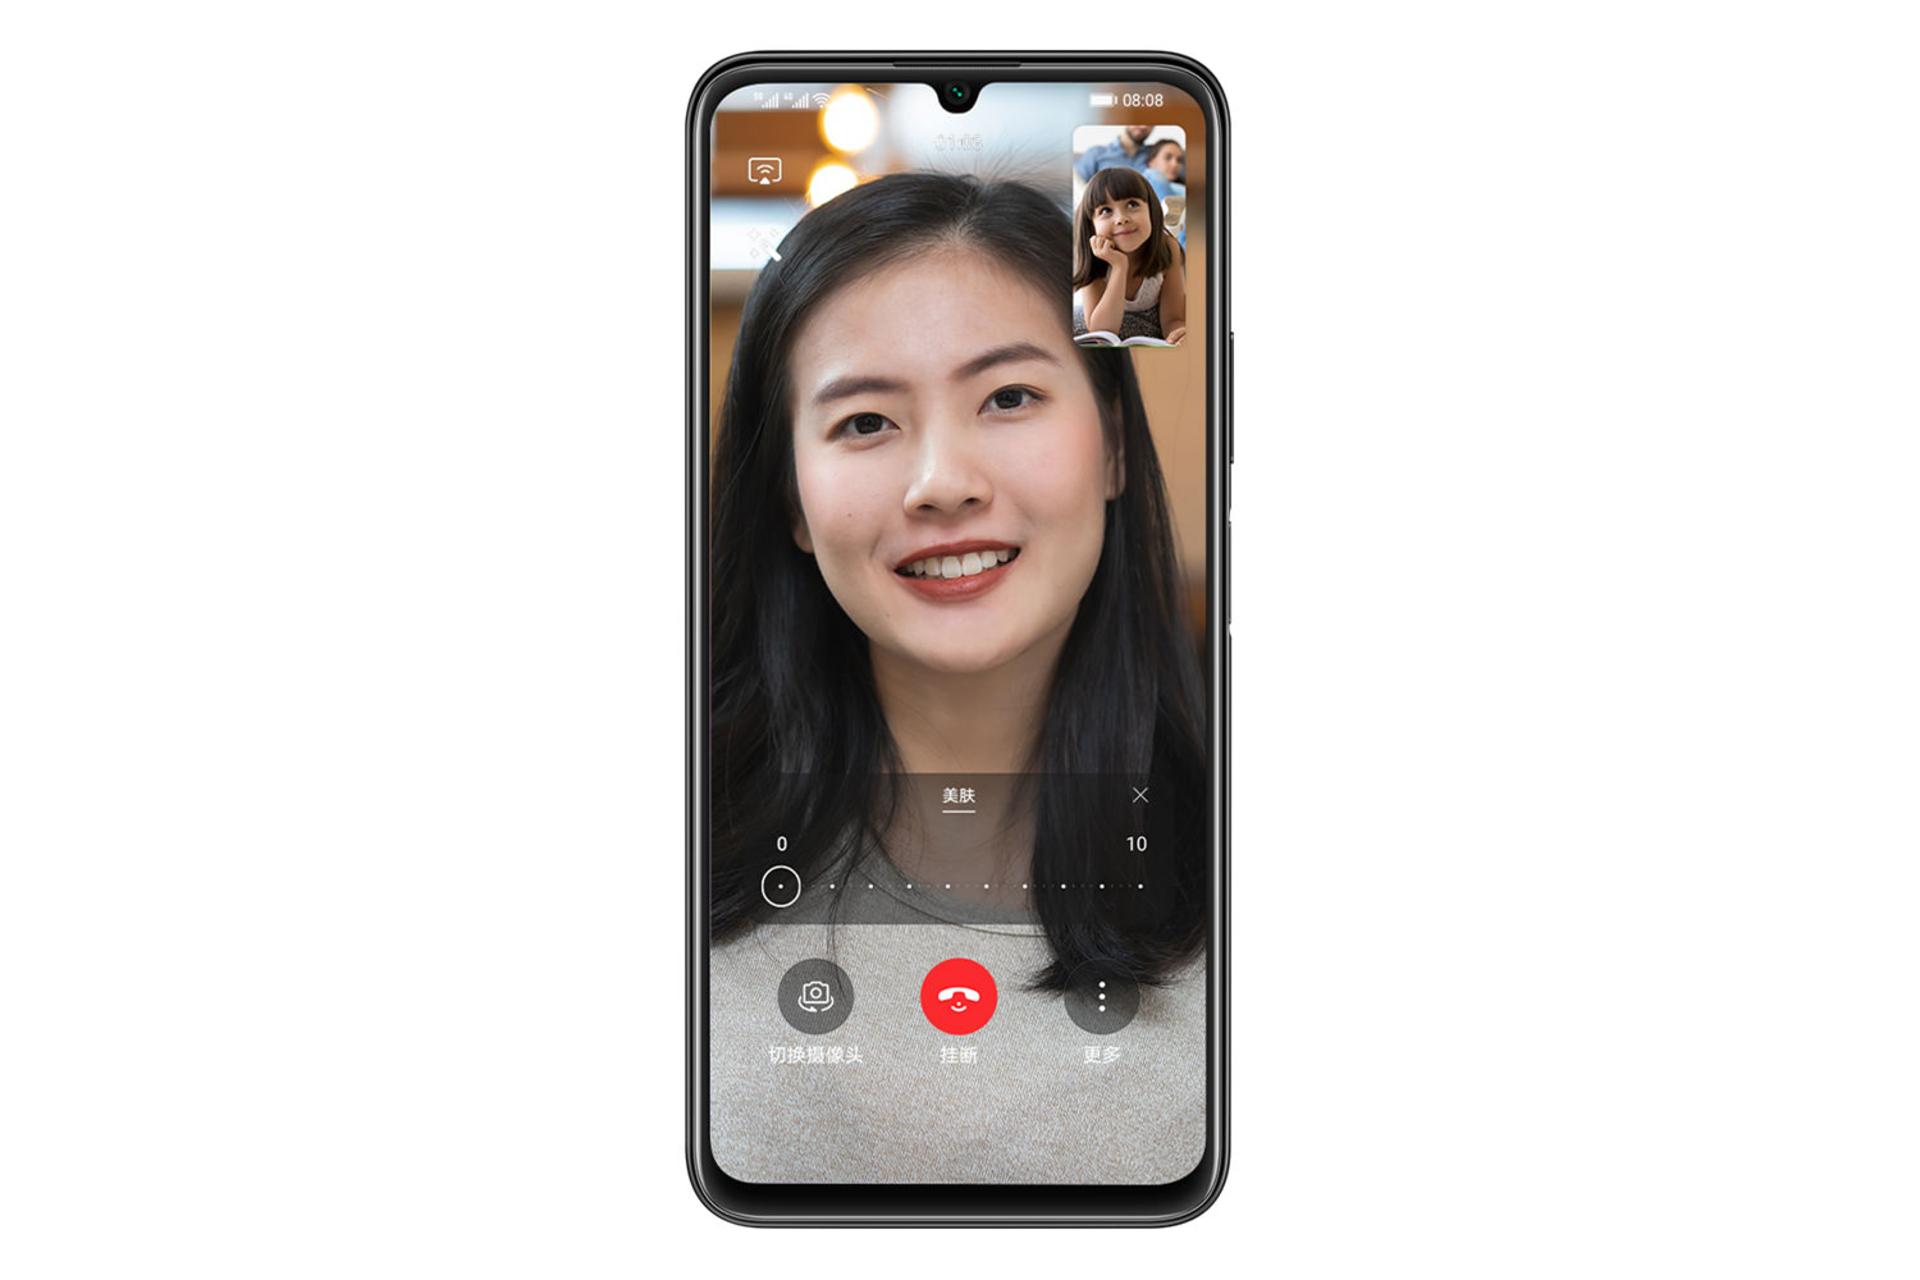 گوشی اینجوی 20 هواوی نمای جلو در حال تماس تصویری/  Huawei Enjoy 20 5G